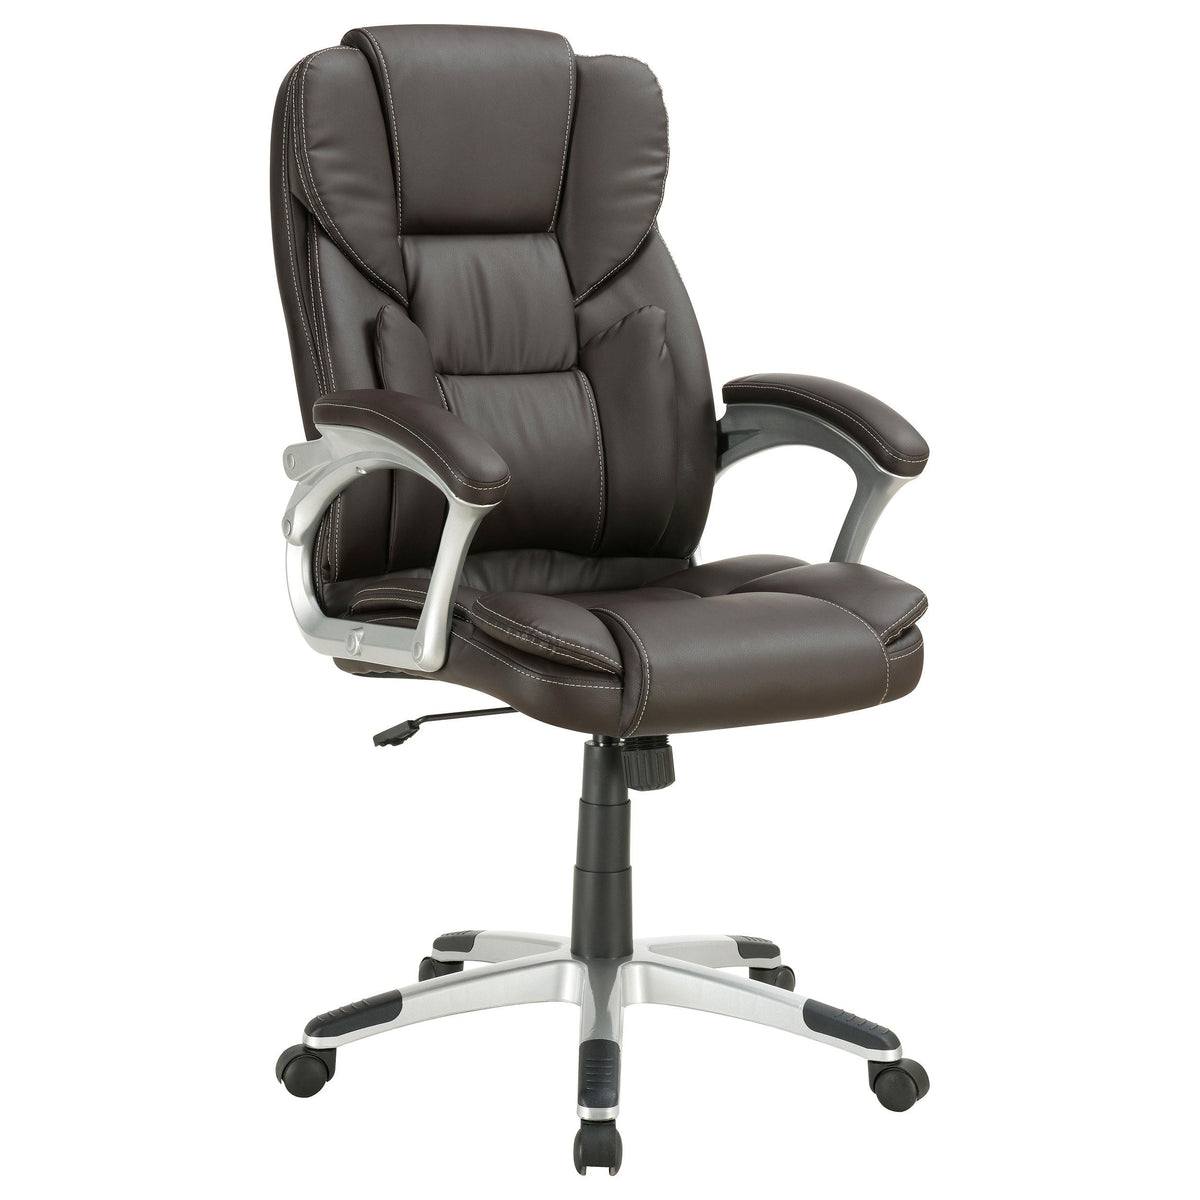 Kaffir Adjustable Height Office Chair Dark Brown and Silver  Las Vegas Furniture Stores